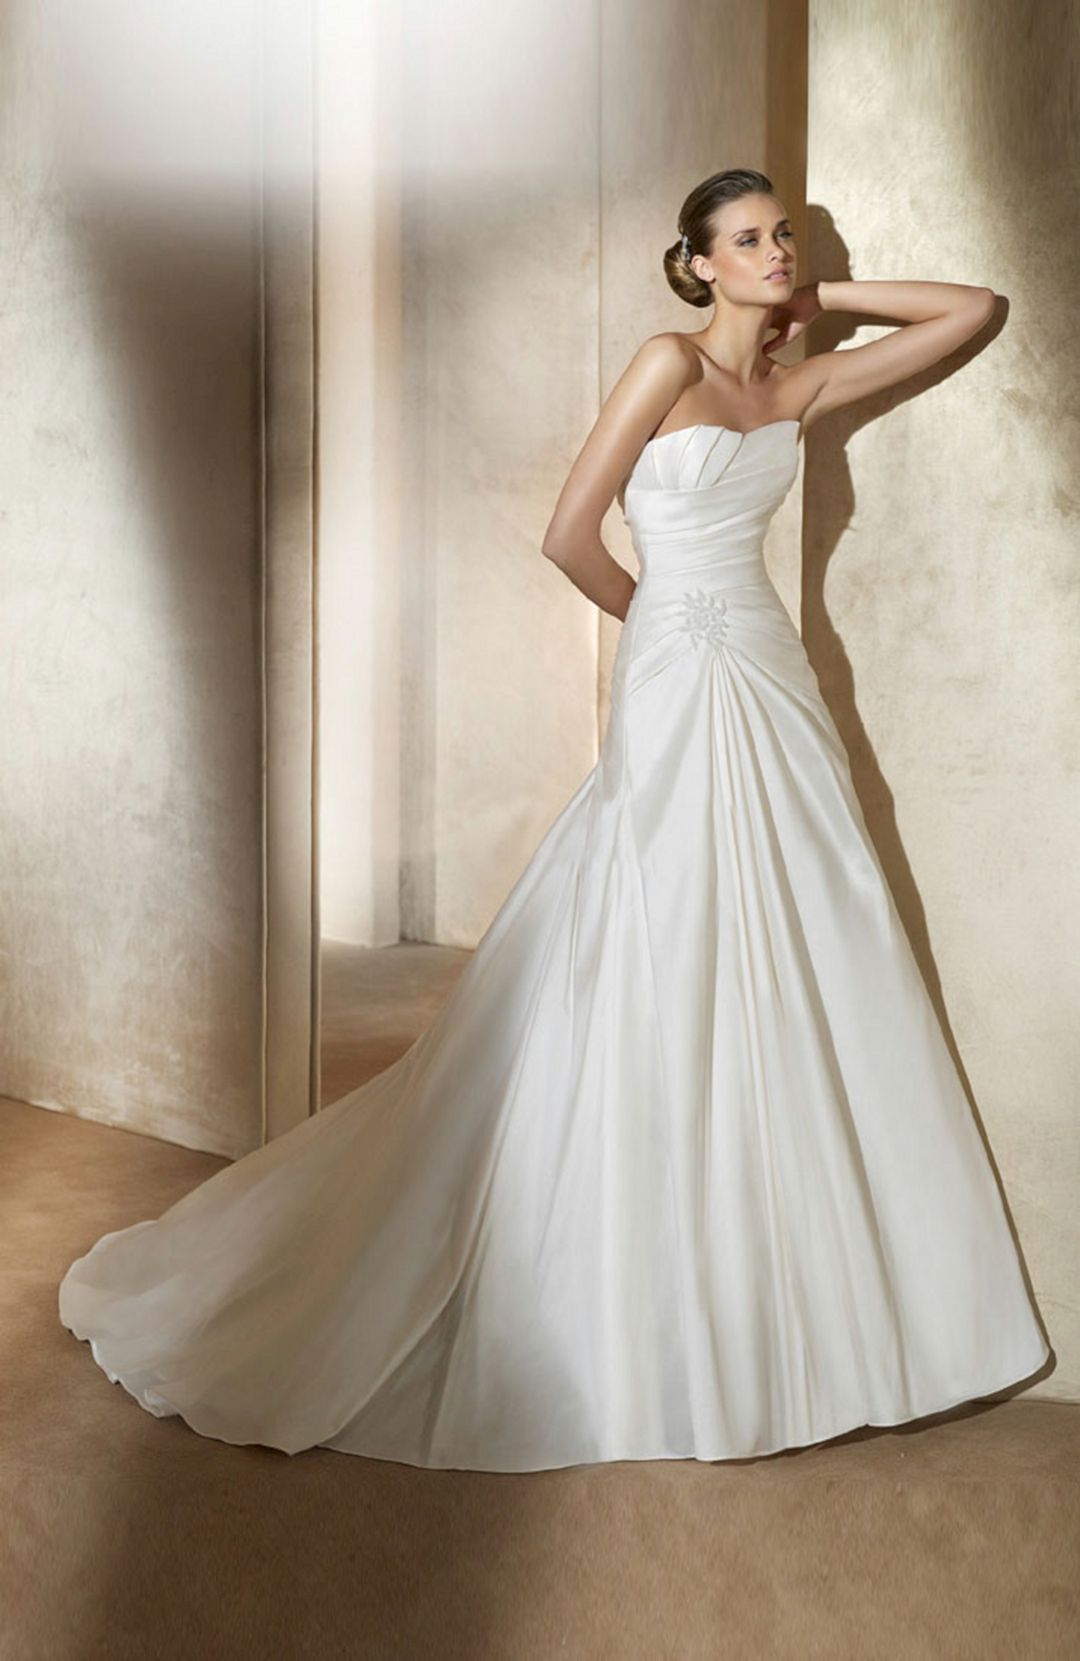 Wedding Dresses For Tall Brides Top 10 wedding dresses for tall brides ...